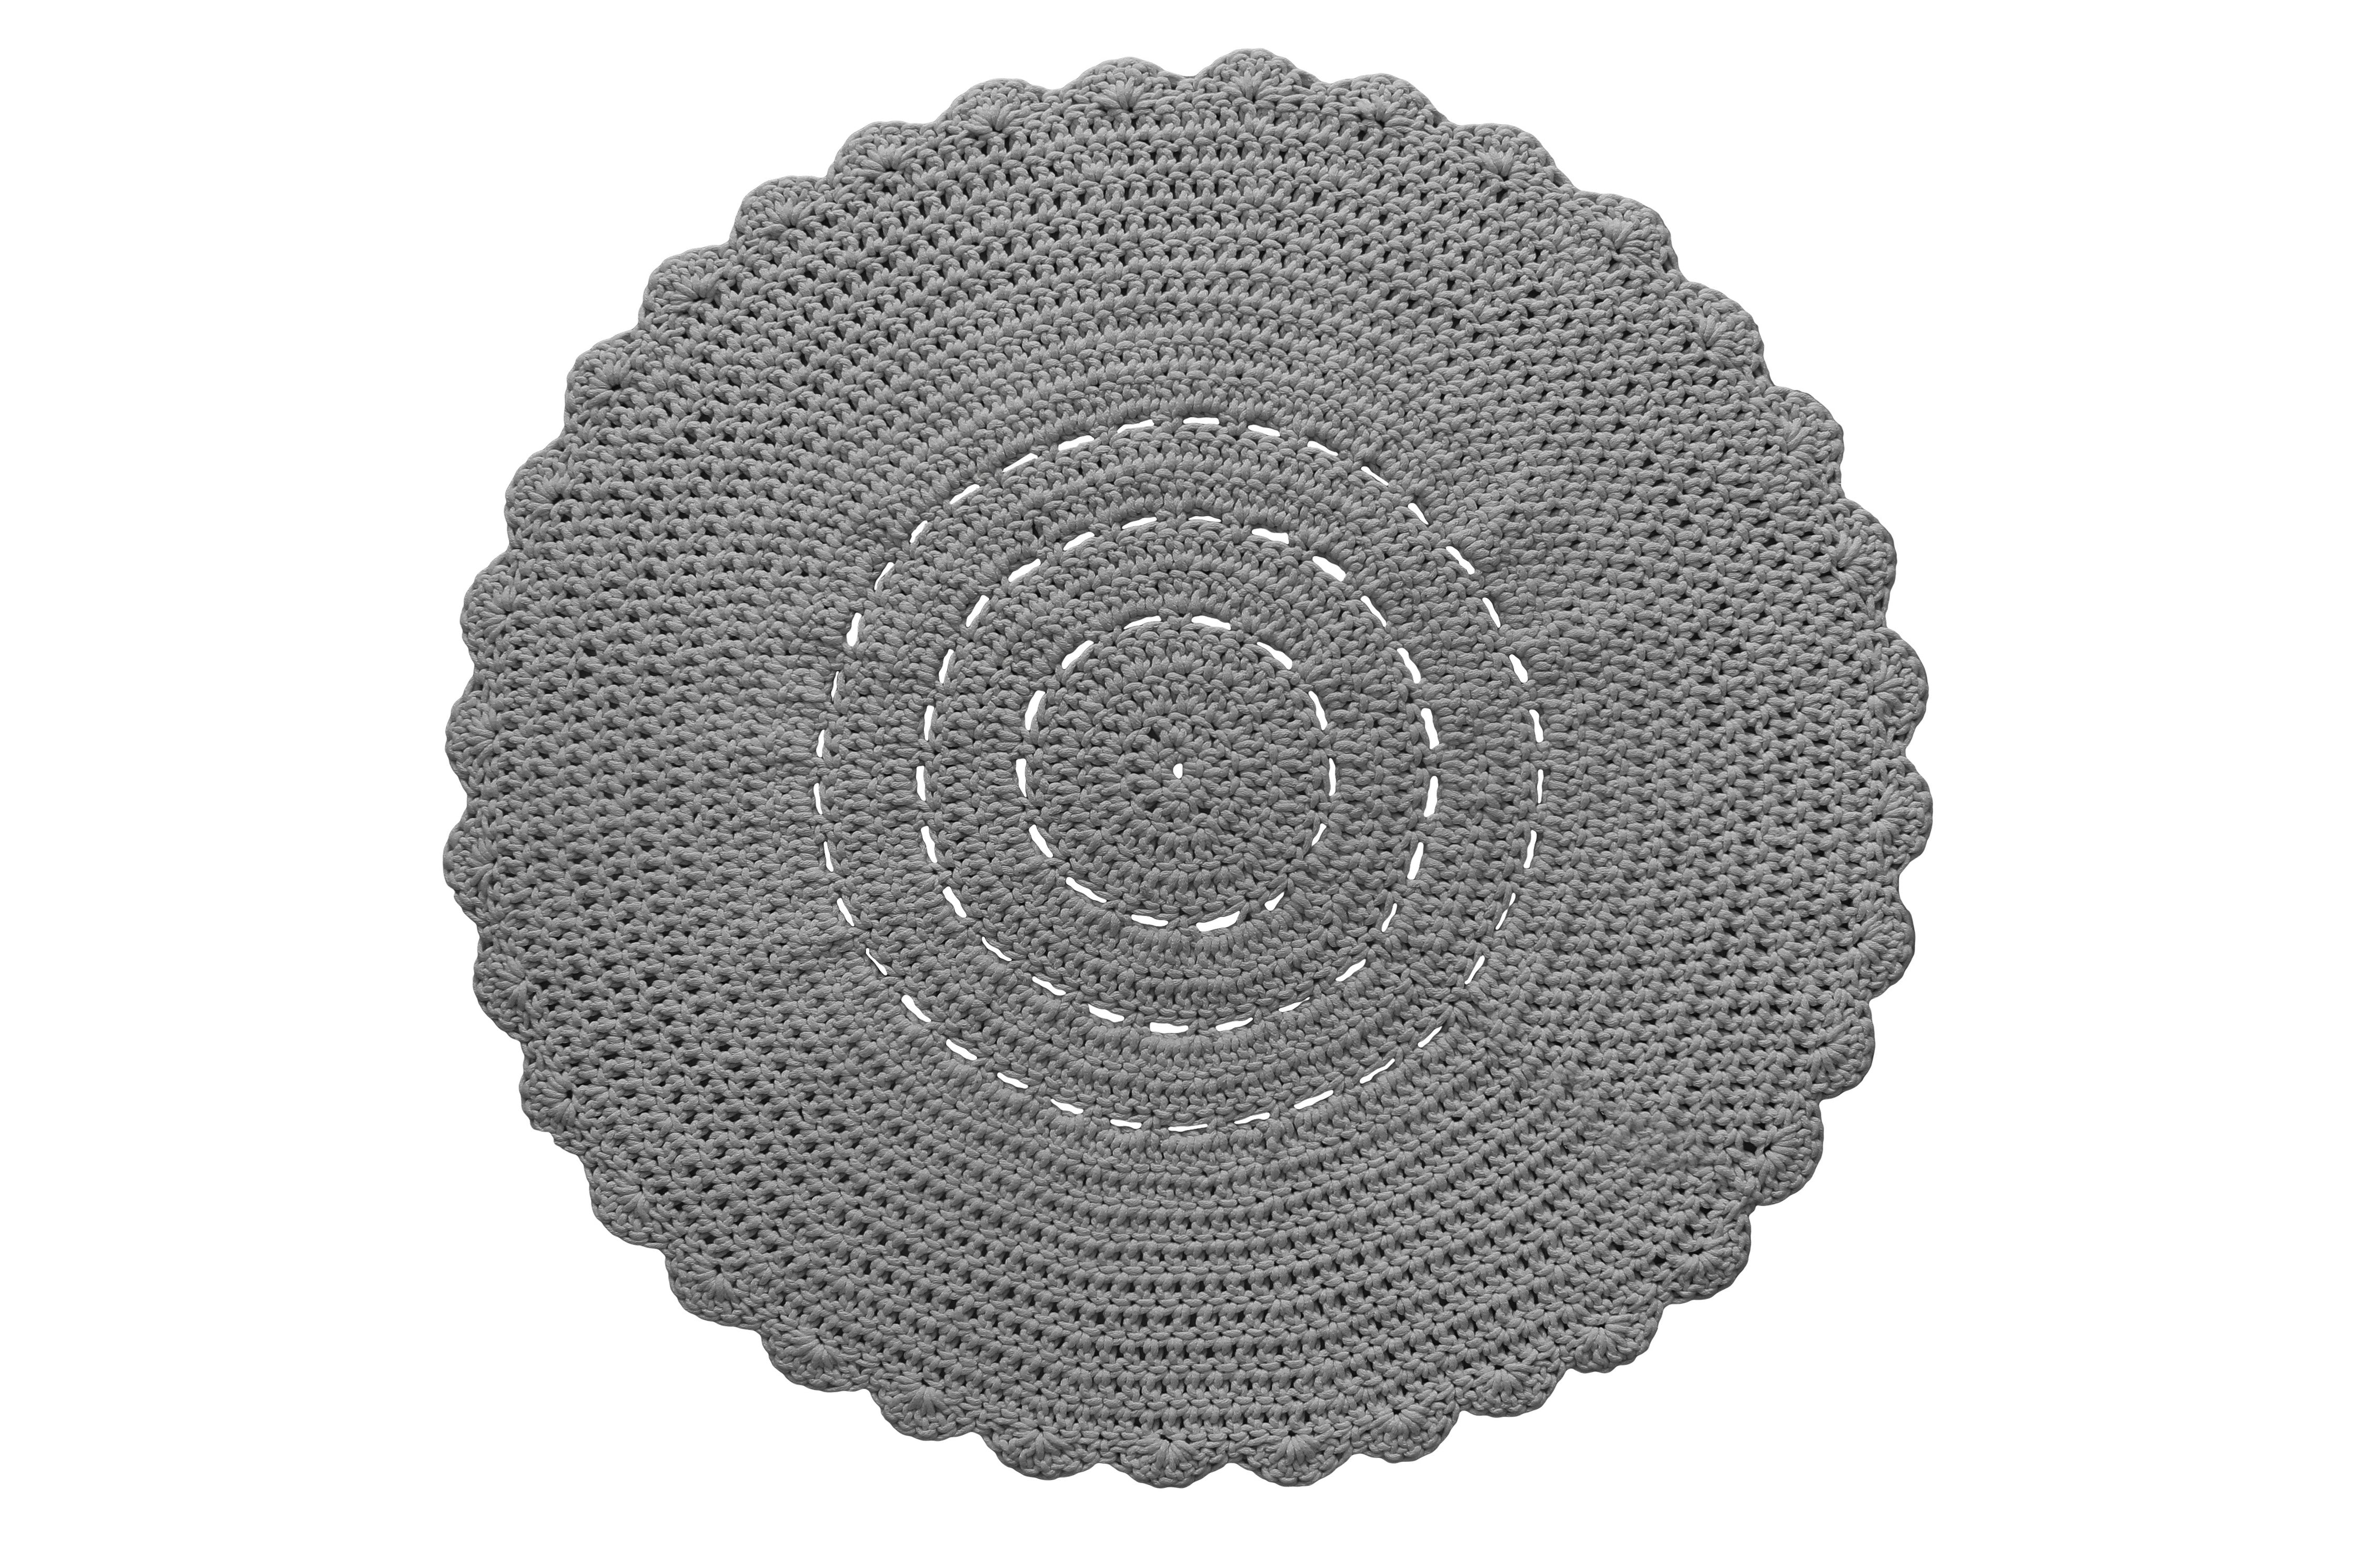 Zuri House Crochet Doily Rug | DARK GREY - 130 cm